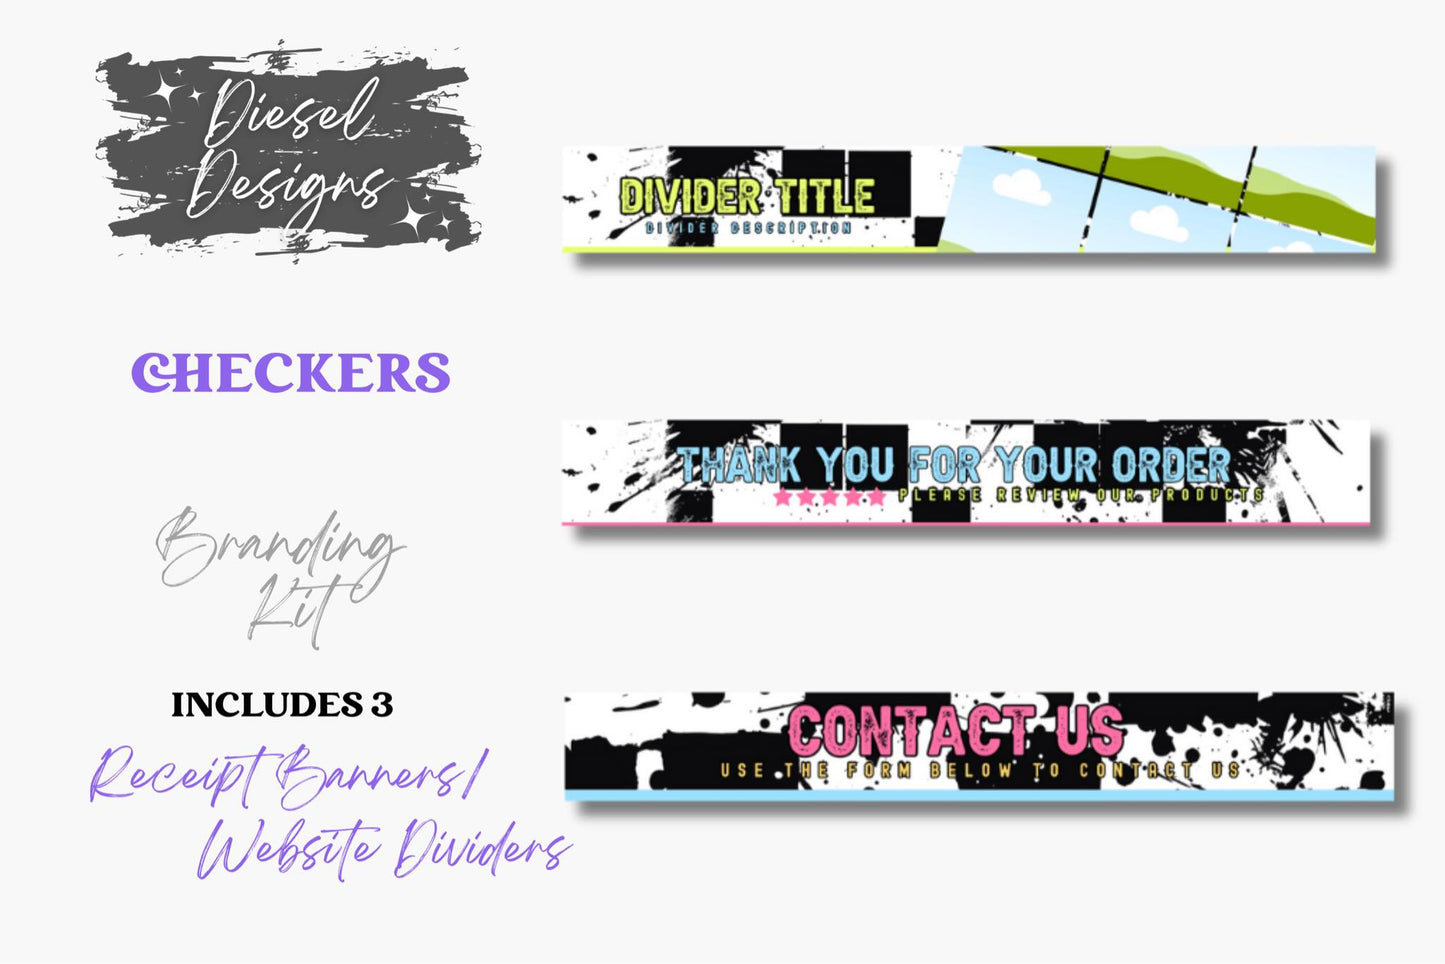 Checkers Branding Kit | Website Kit | Business Card | Logo | Facebook Cover | Editable in Canva